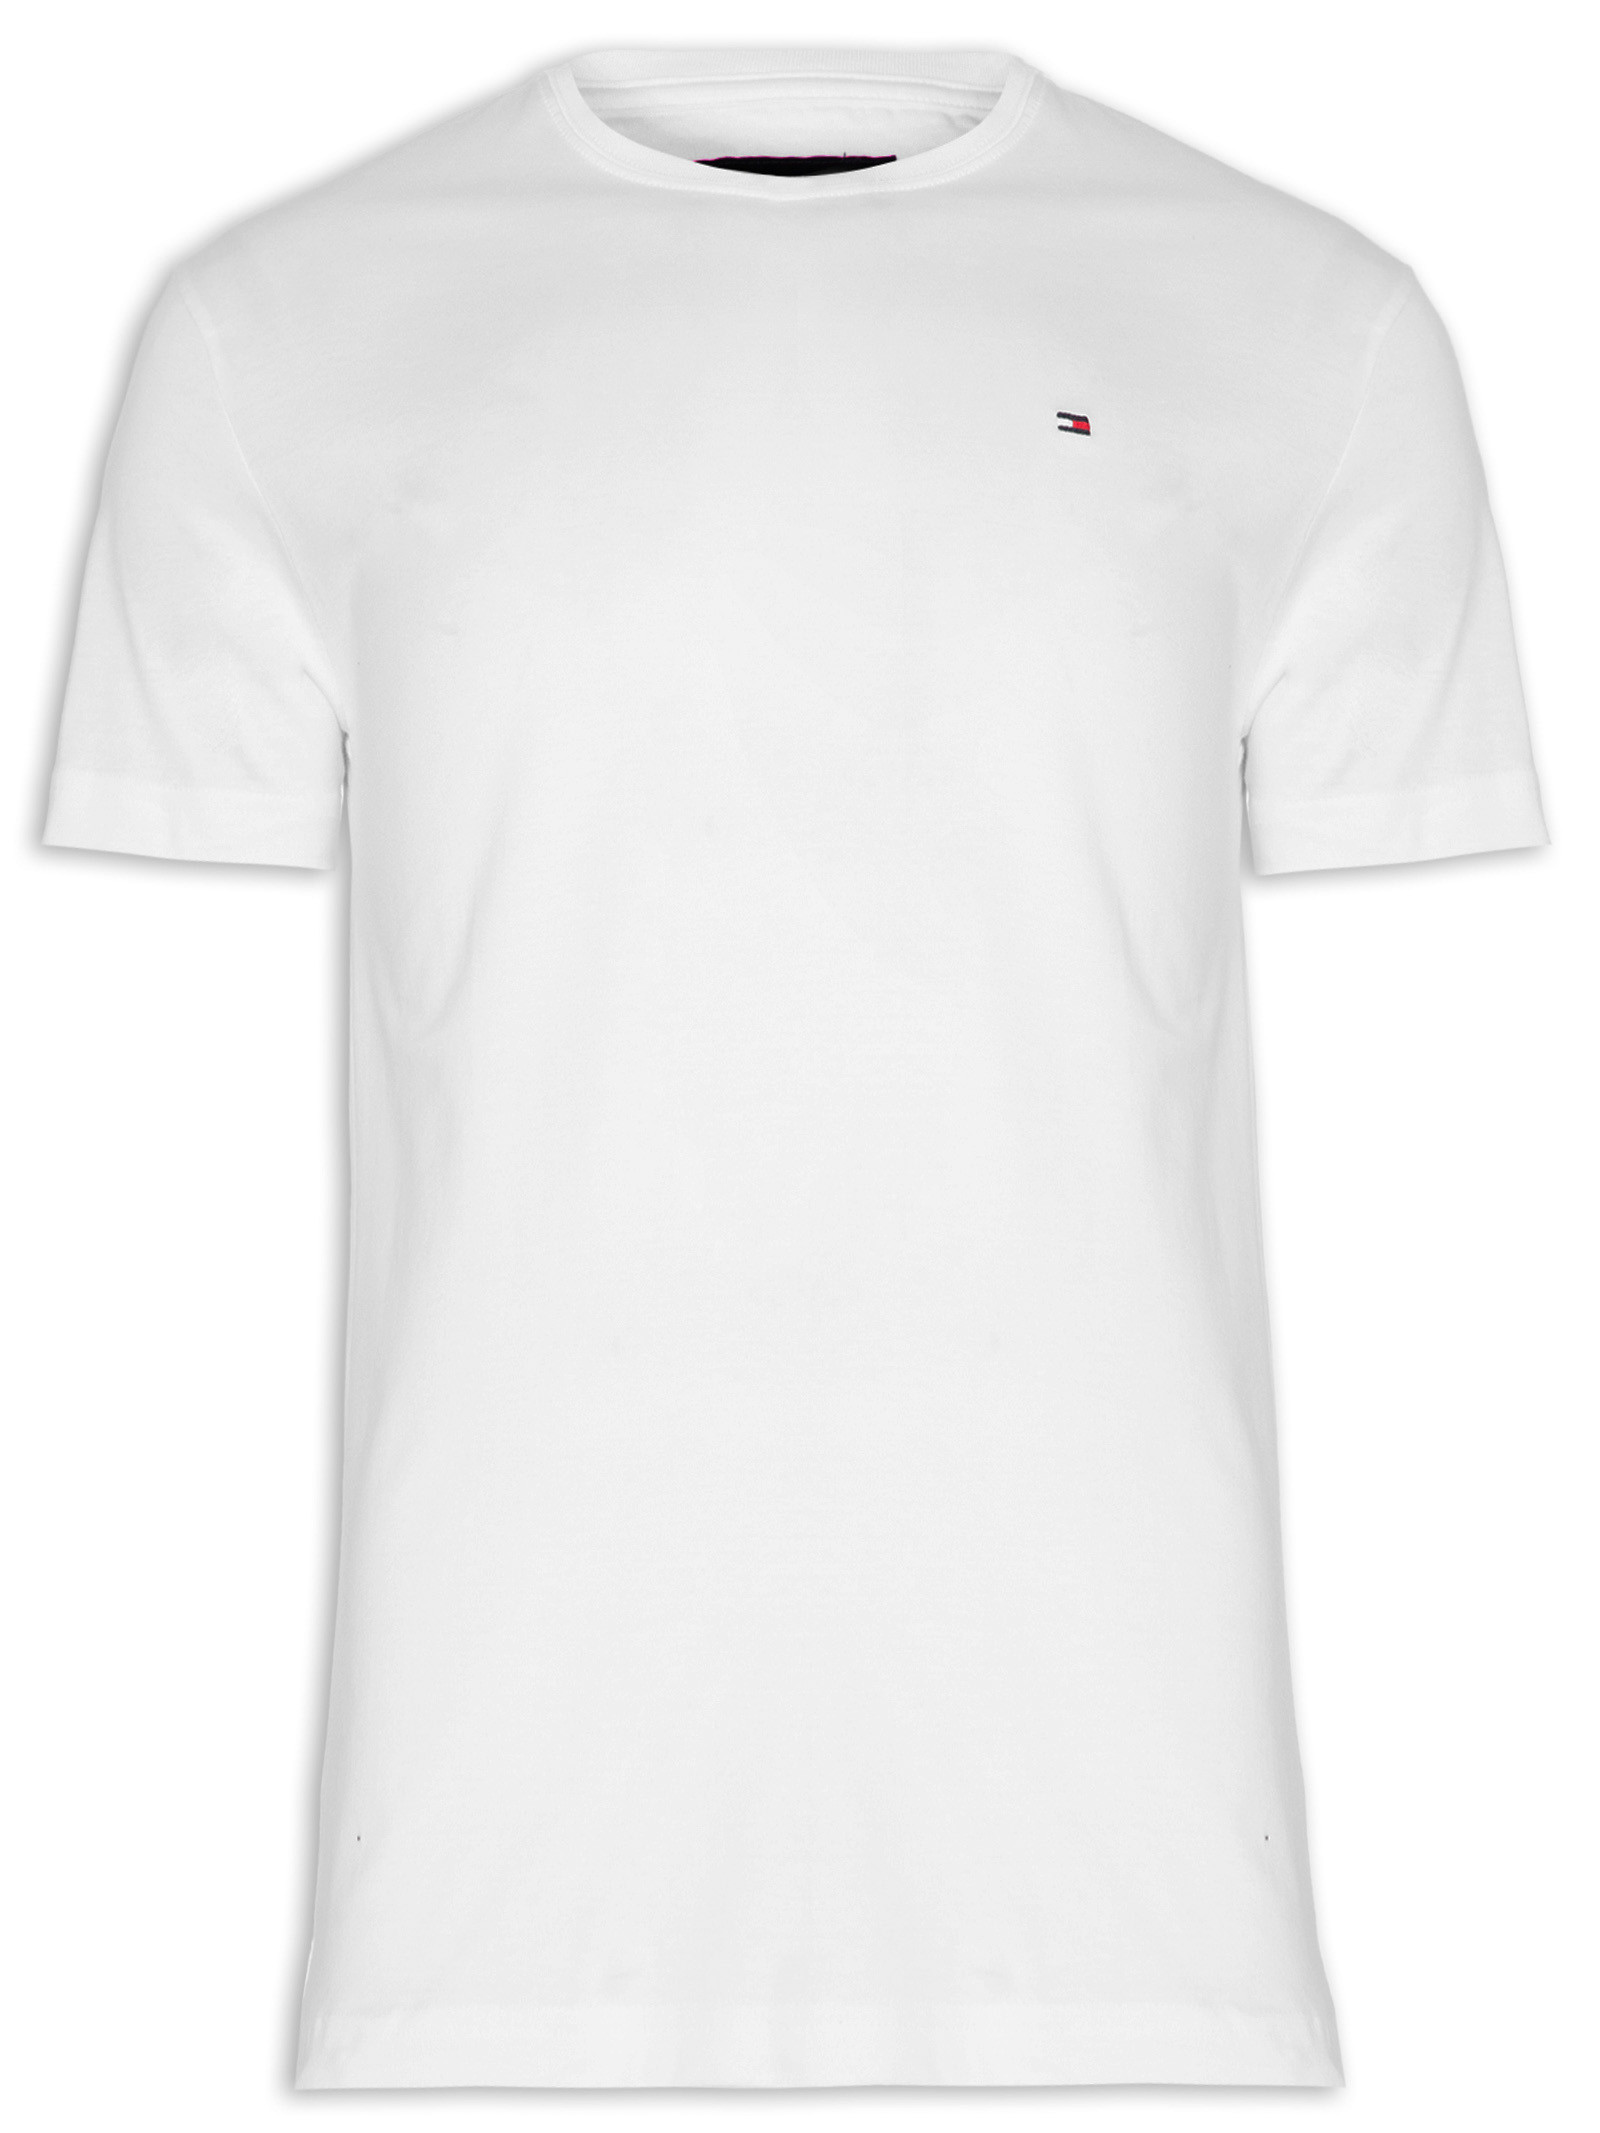 T-shirt Masculina - Tommy Hilfiger - Preto - Shop2gether